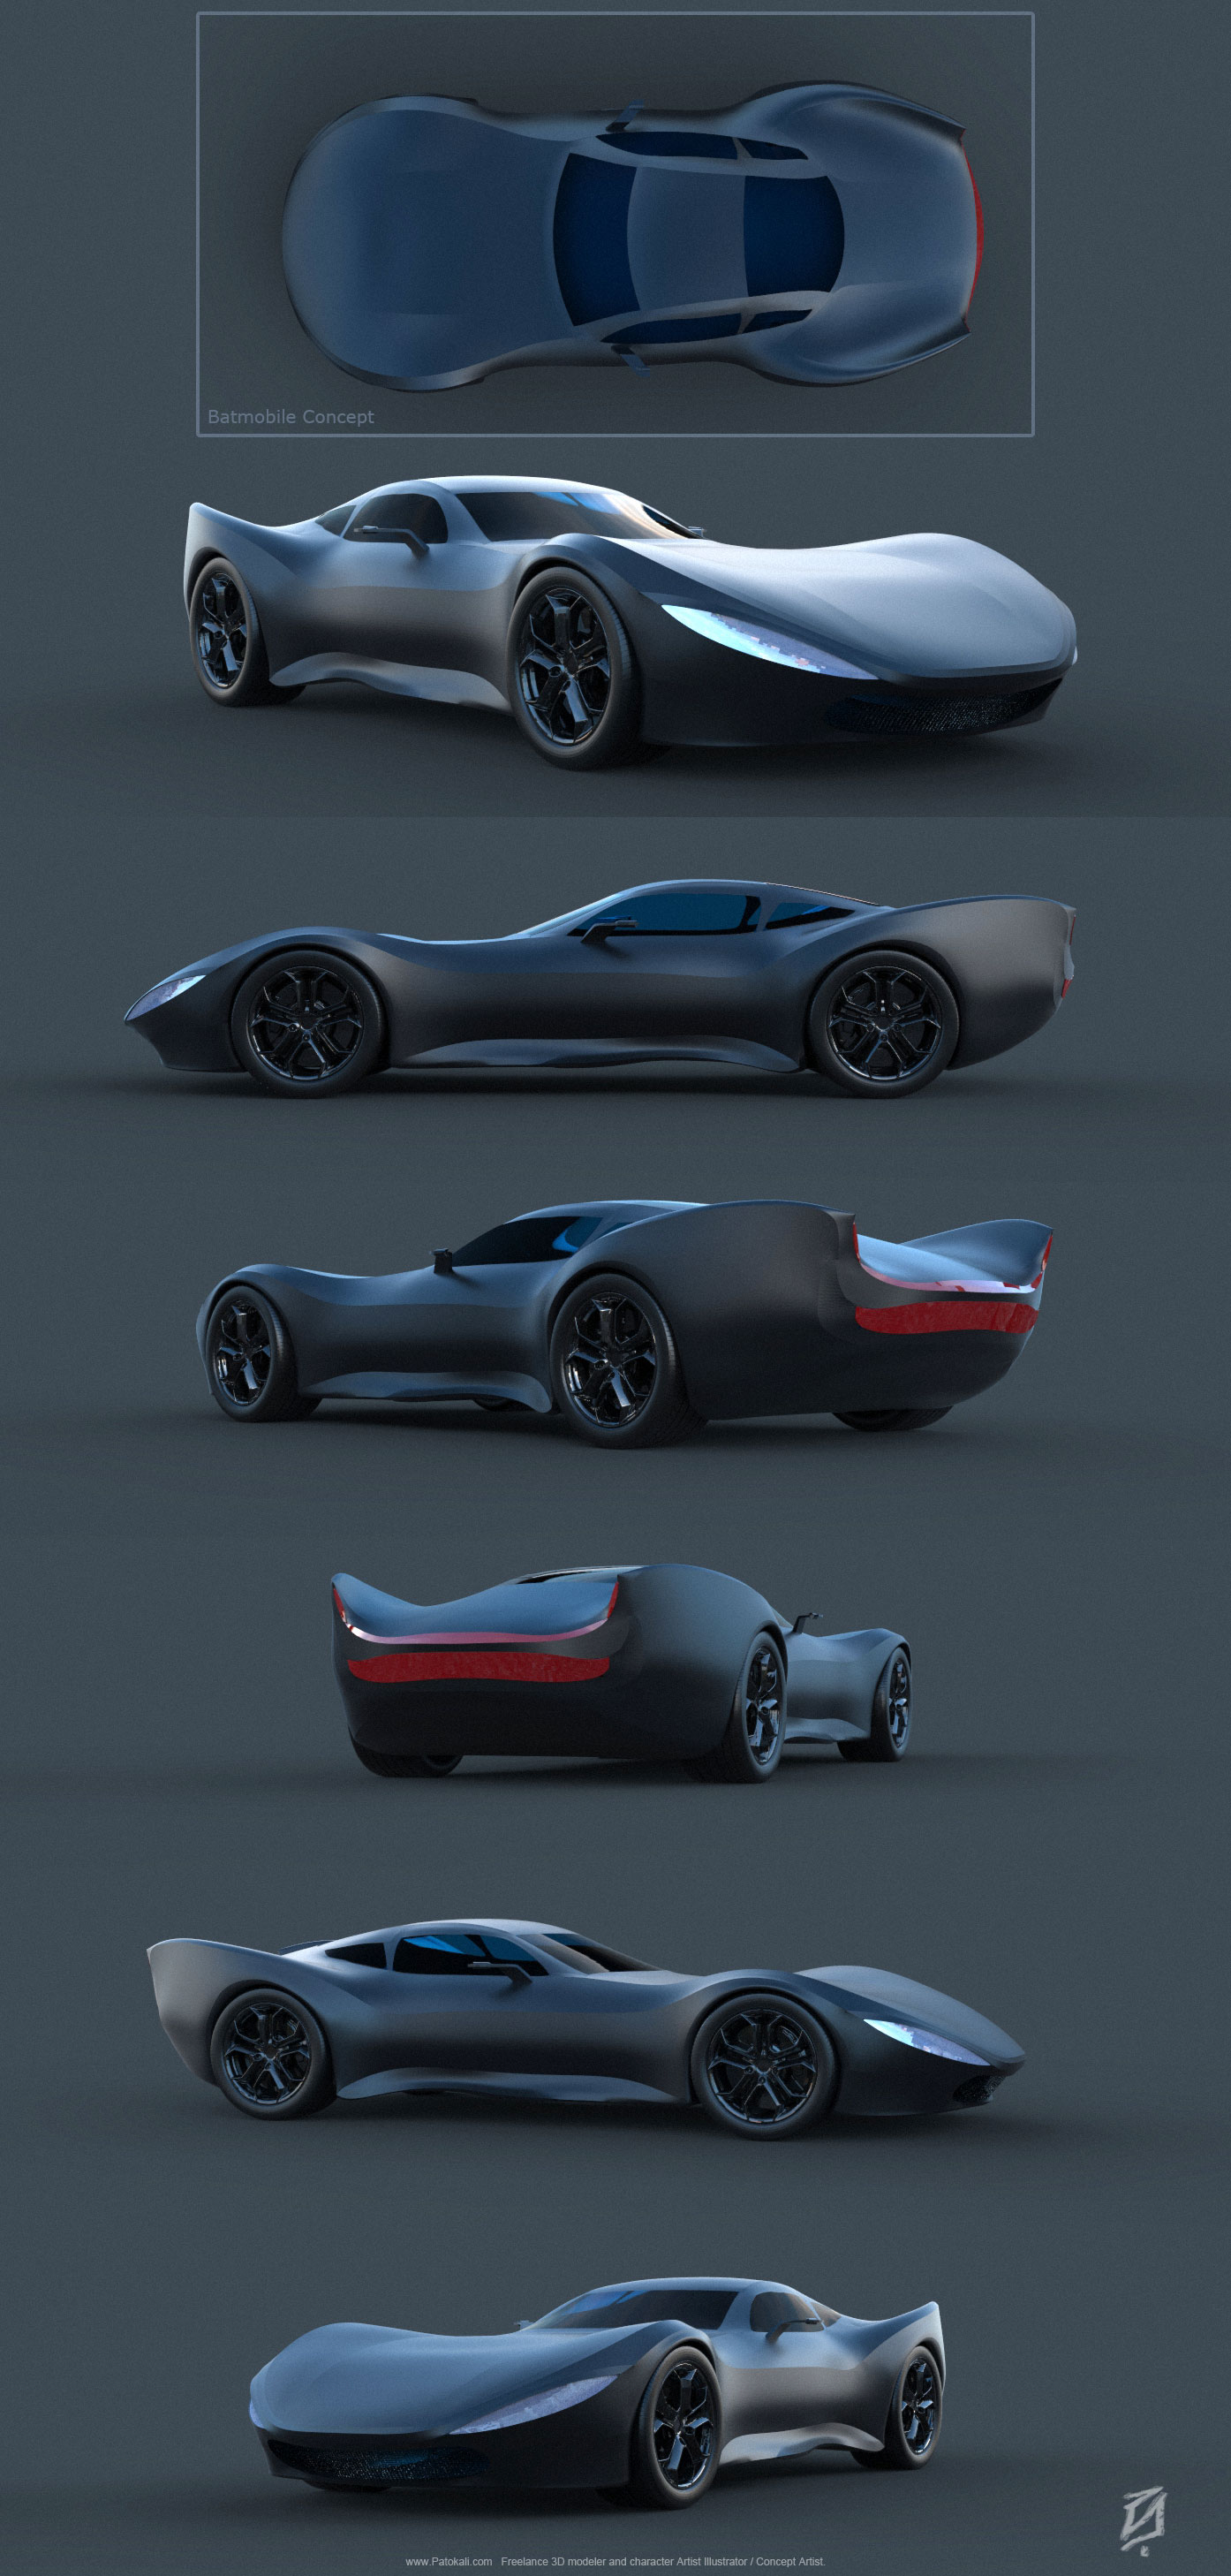 Batmobile-Concept.jpg